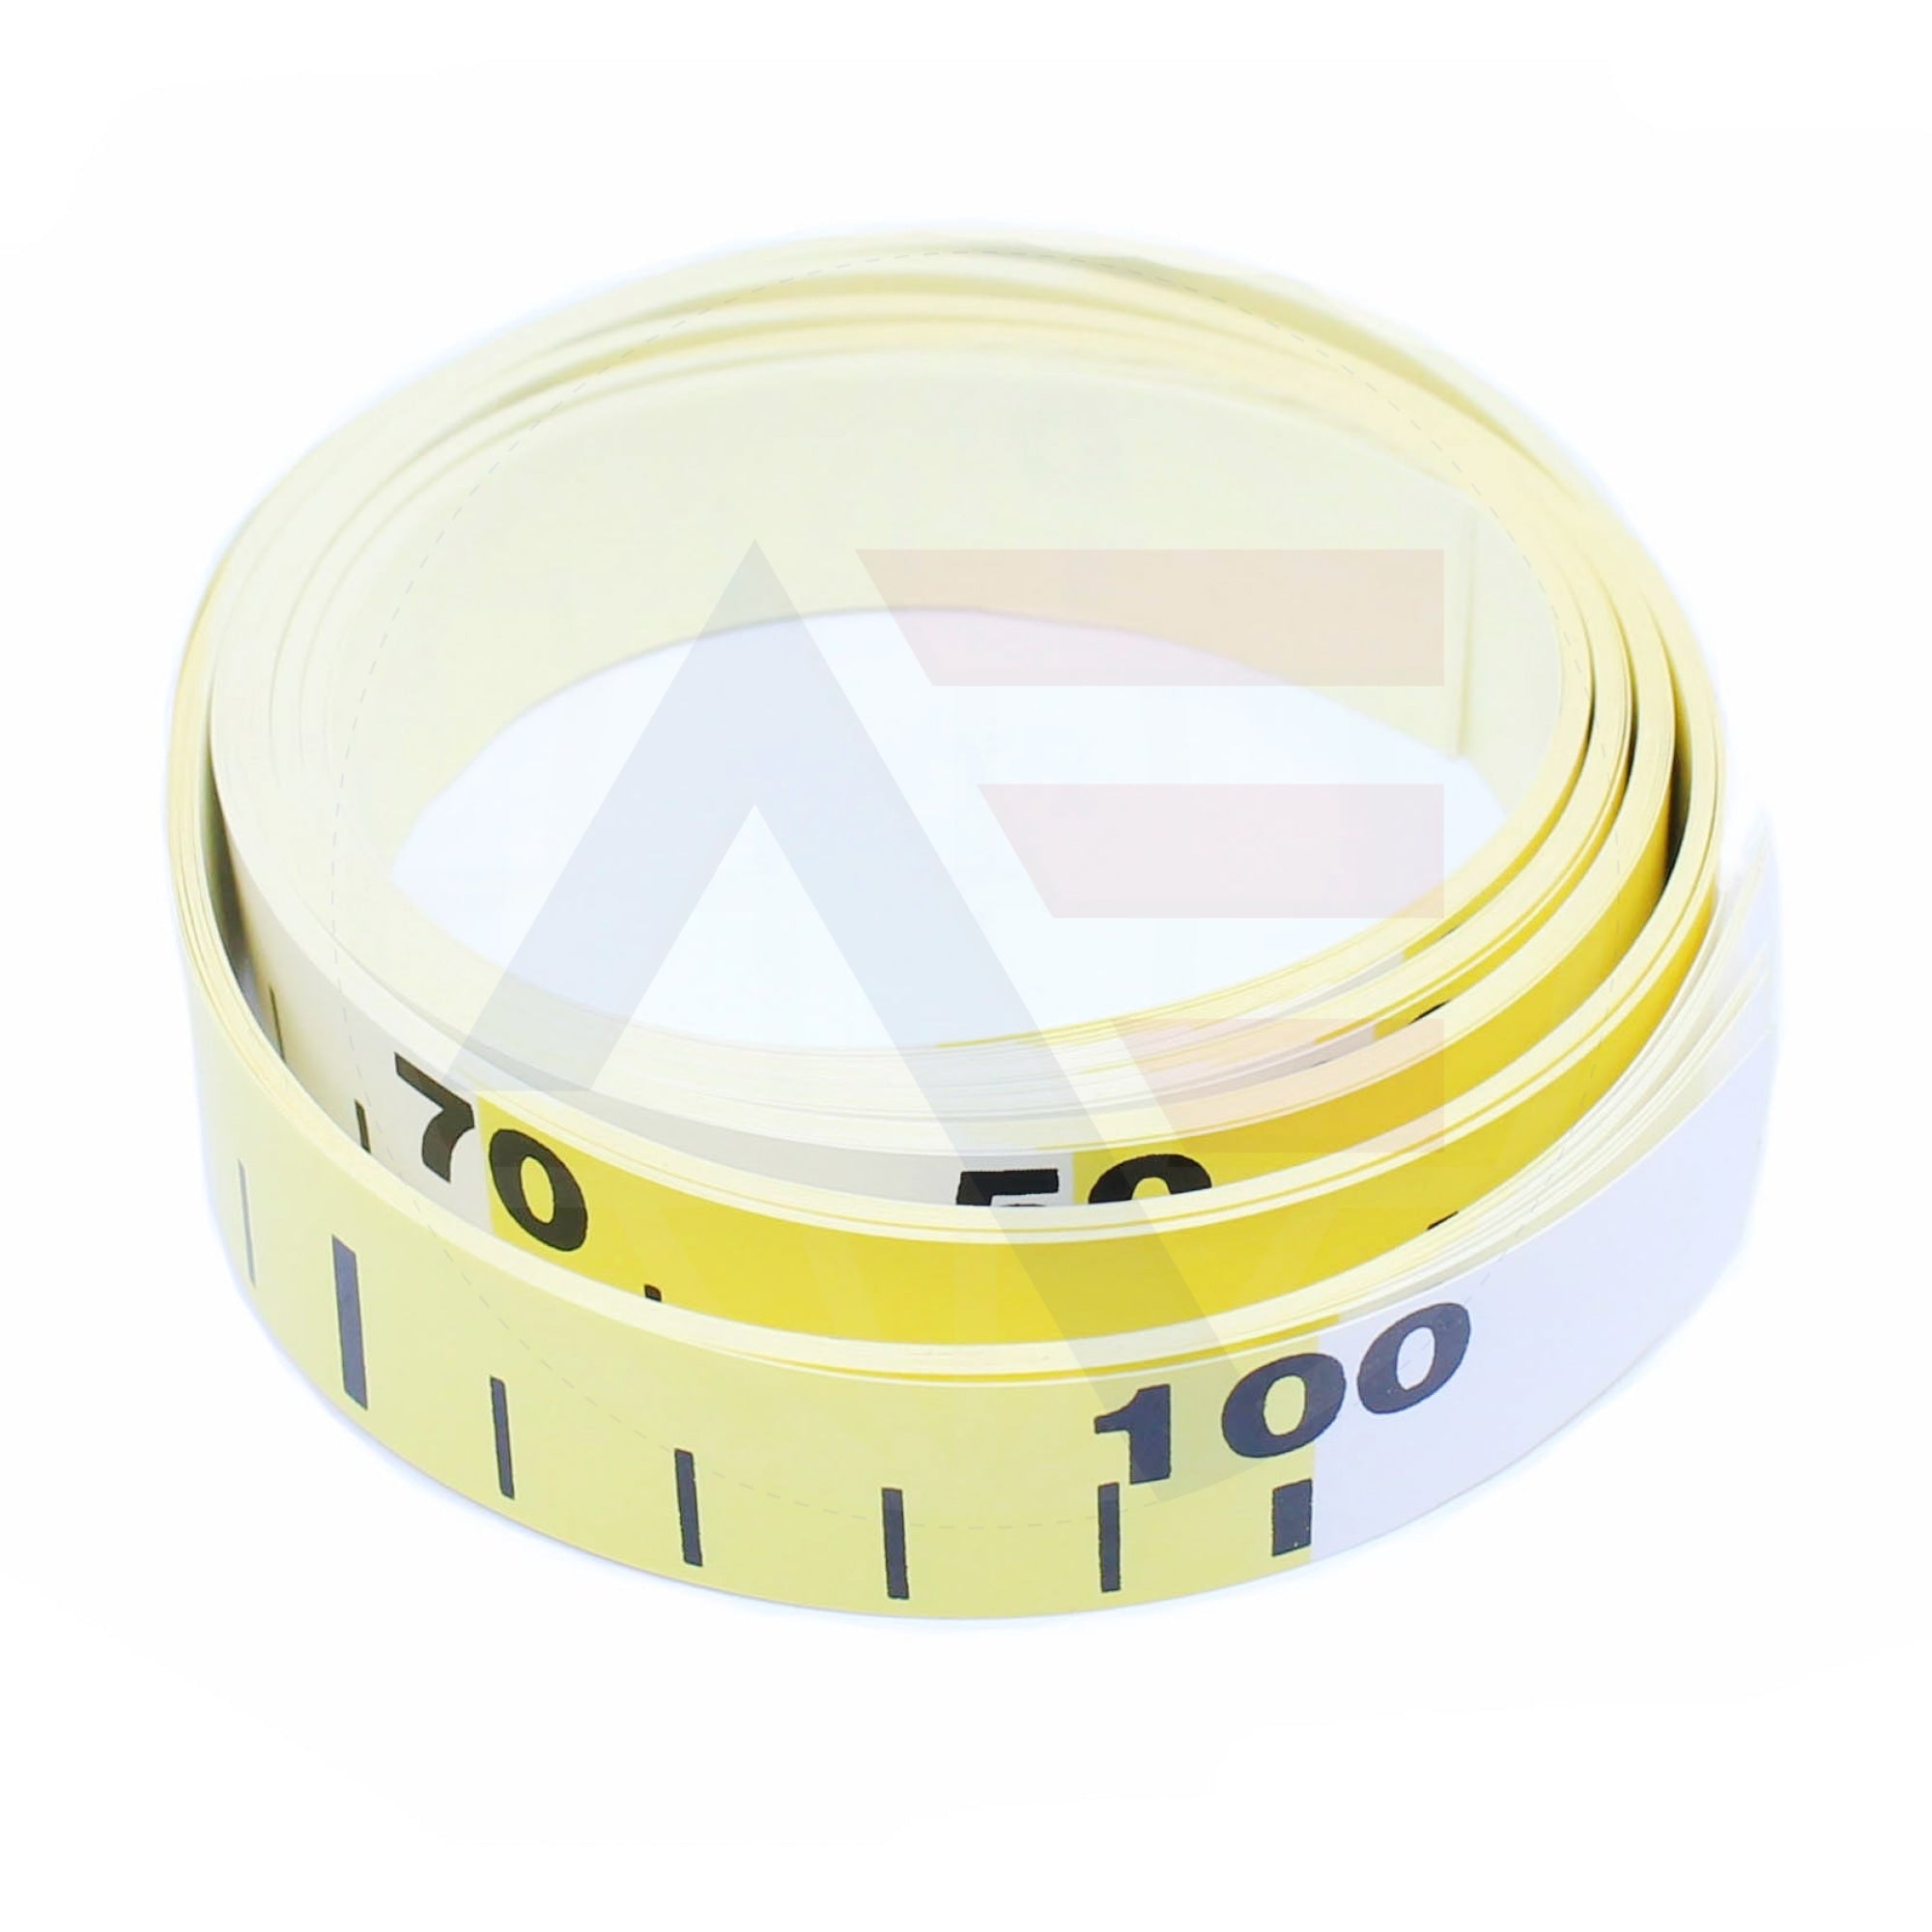 40125D Adhesive Tape Measures